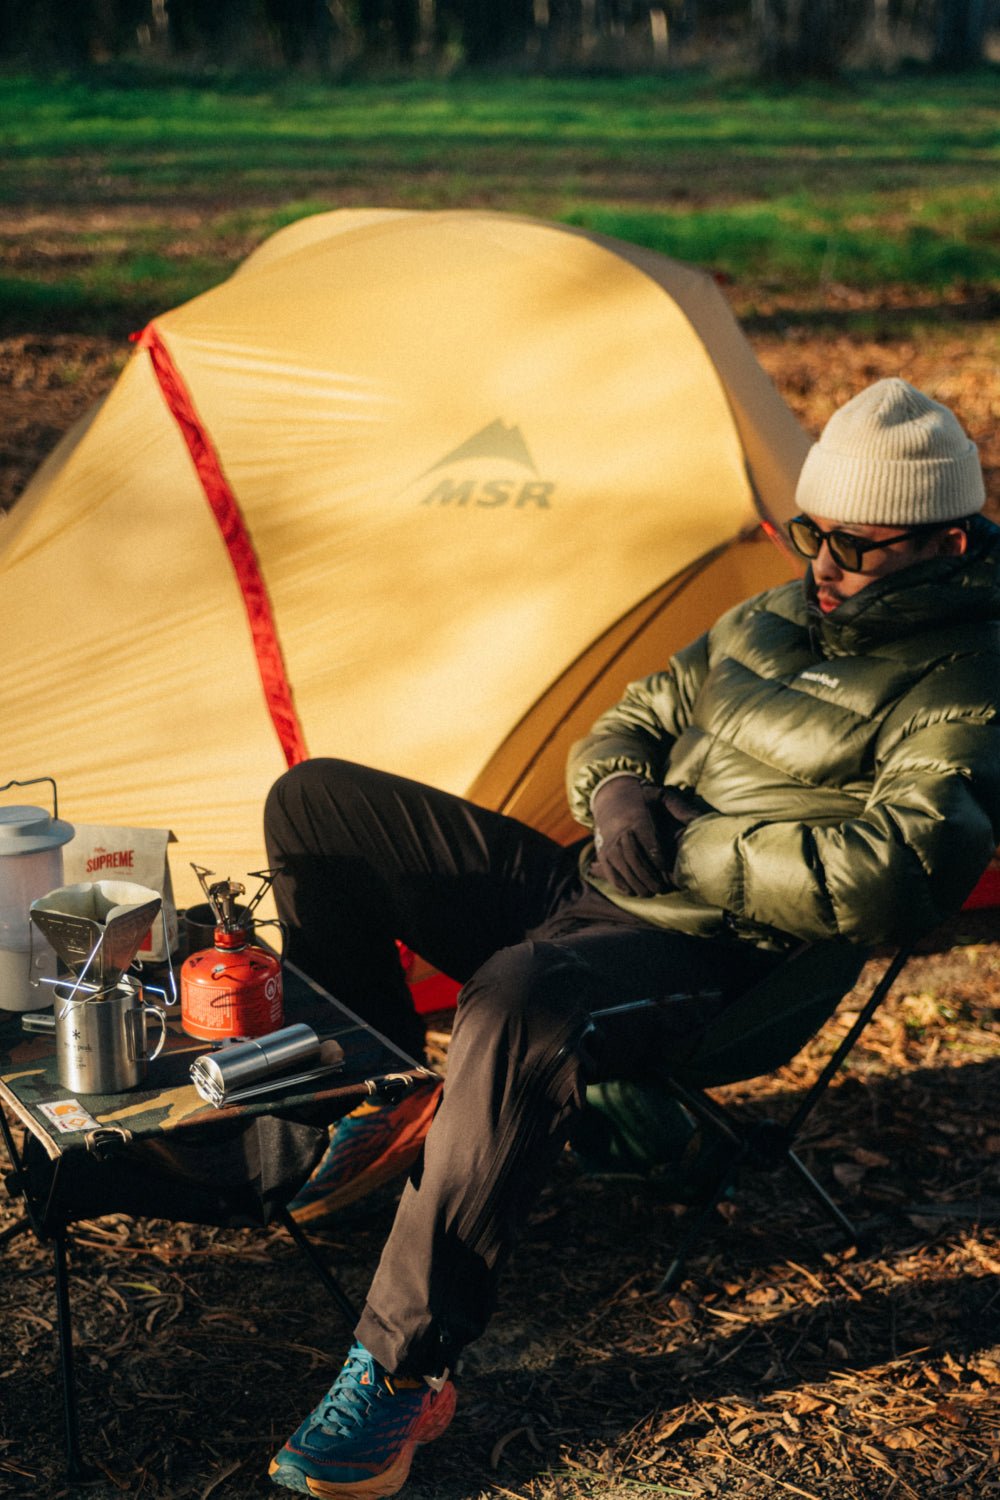 MSR Hubba Hubba 2 Tent | Coffee Outdoors